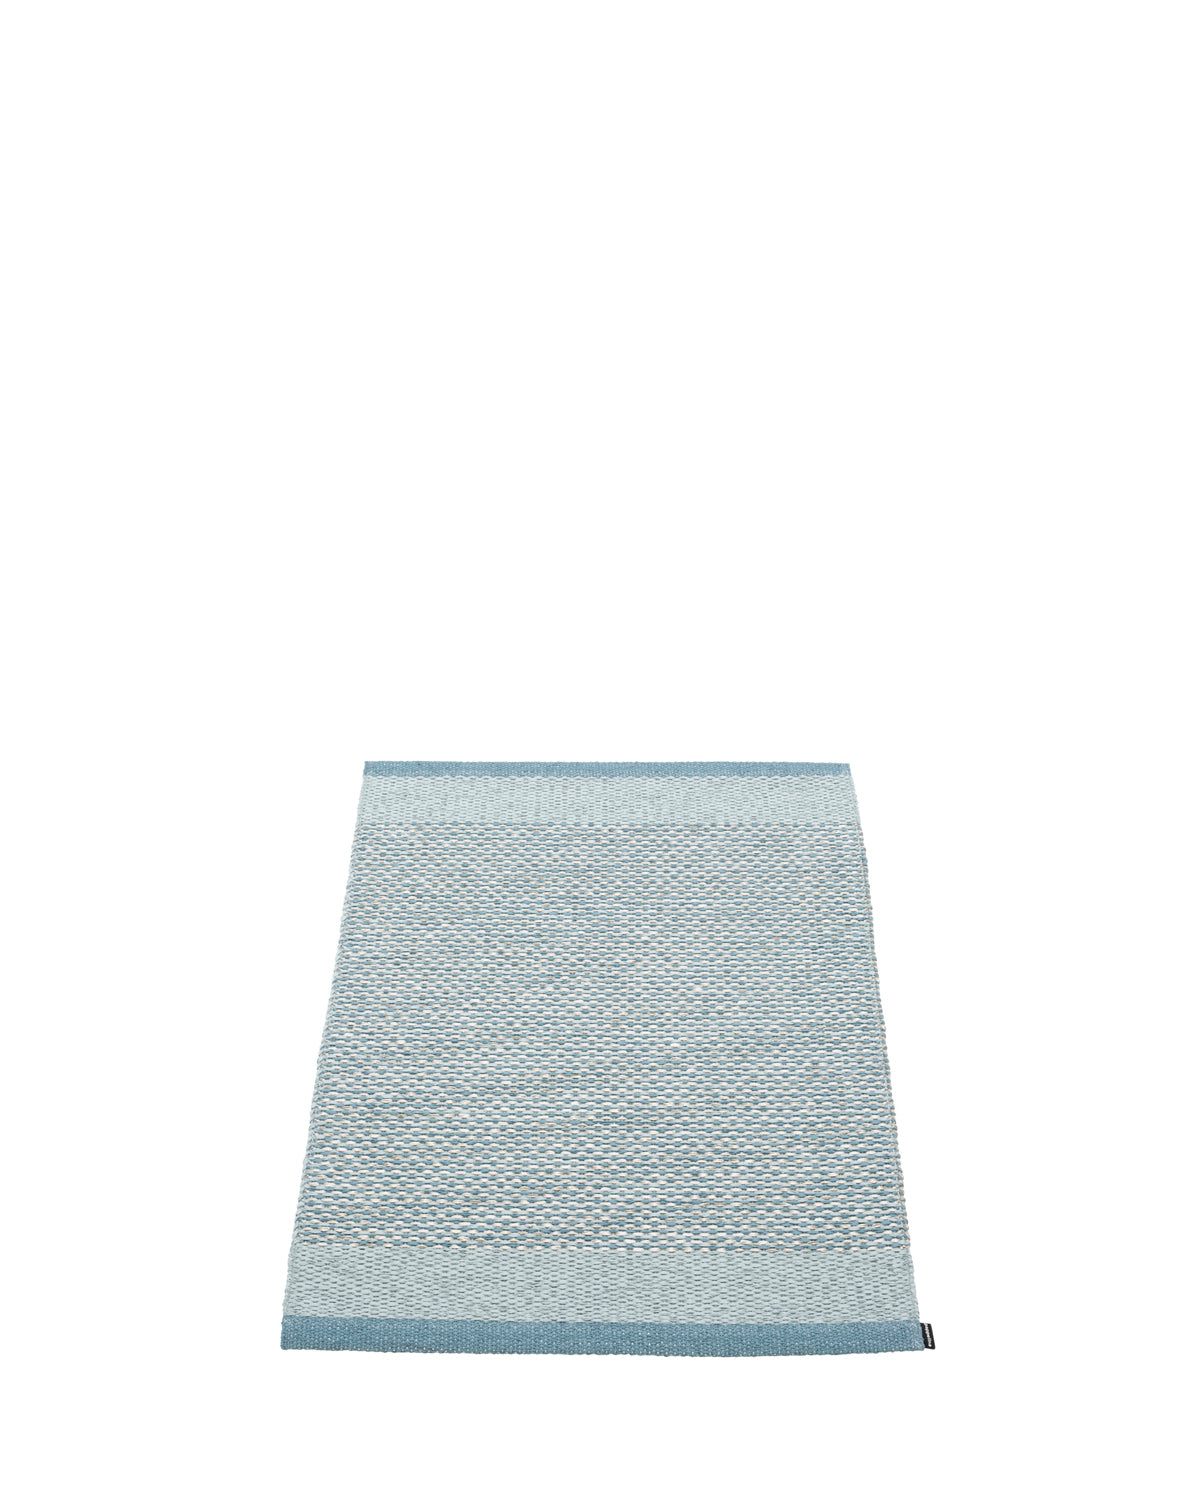 Pappelina Rug EDIT Dove Blue/Blue Fog/Stone Metallic 2.25 x 4 ft.  image 1